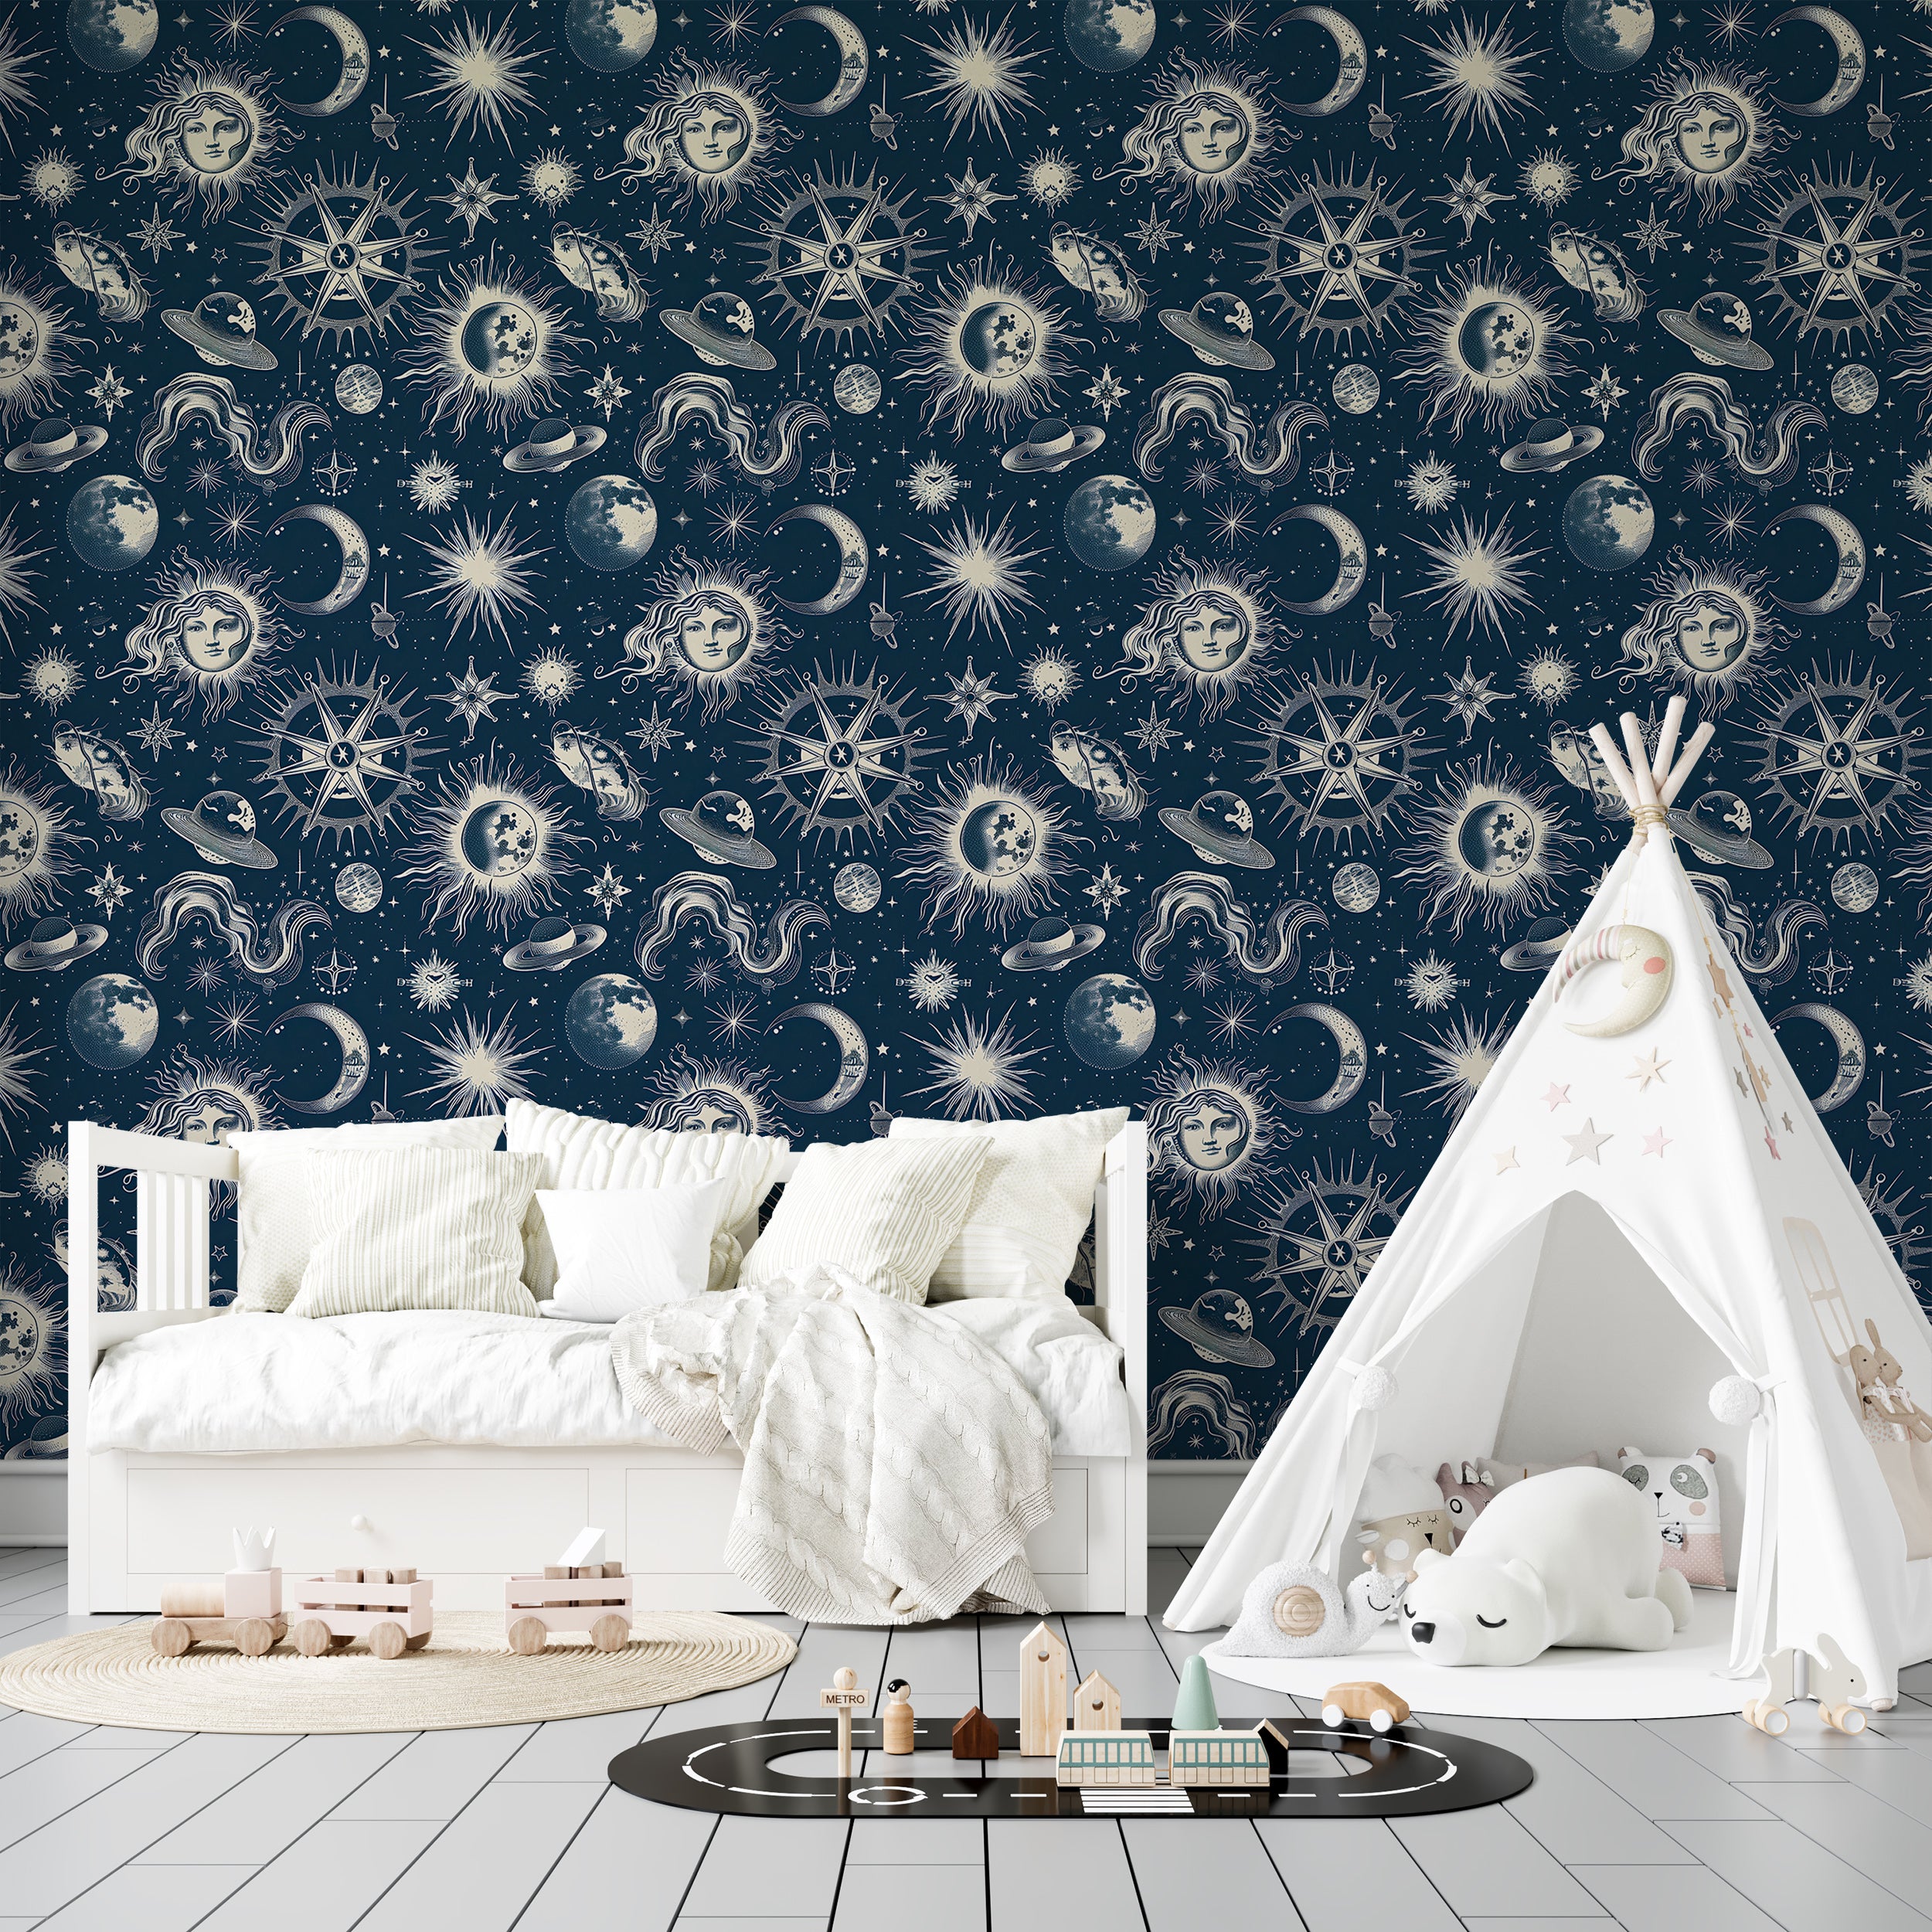 Astrology-themed wall decor